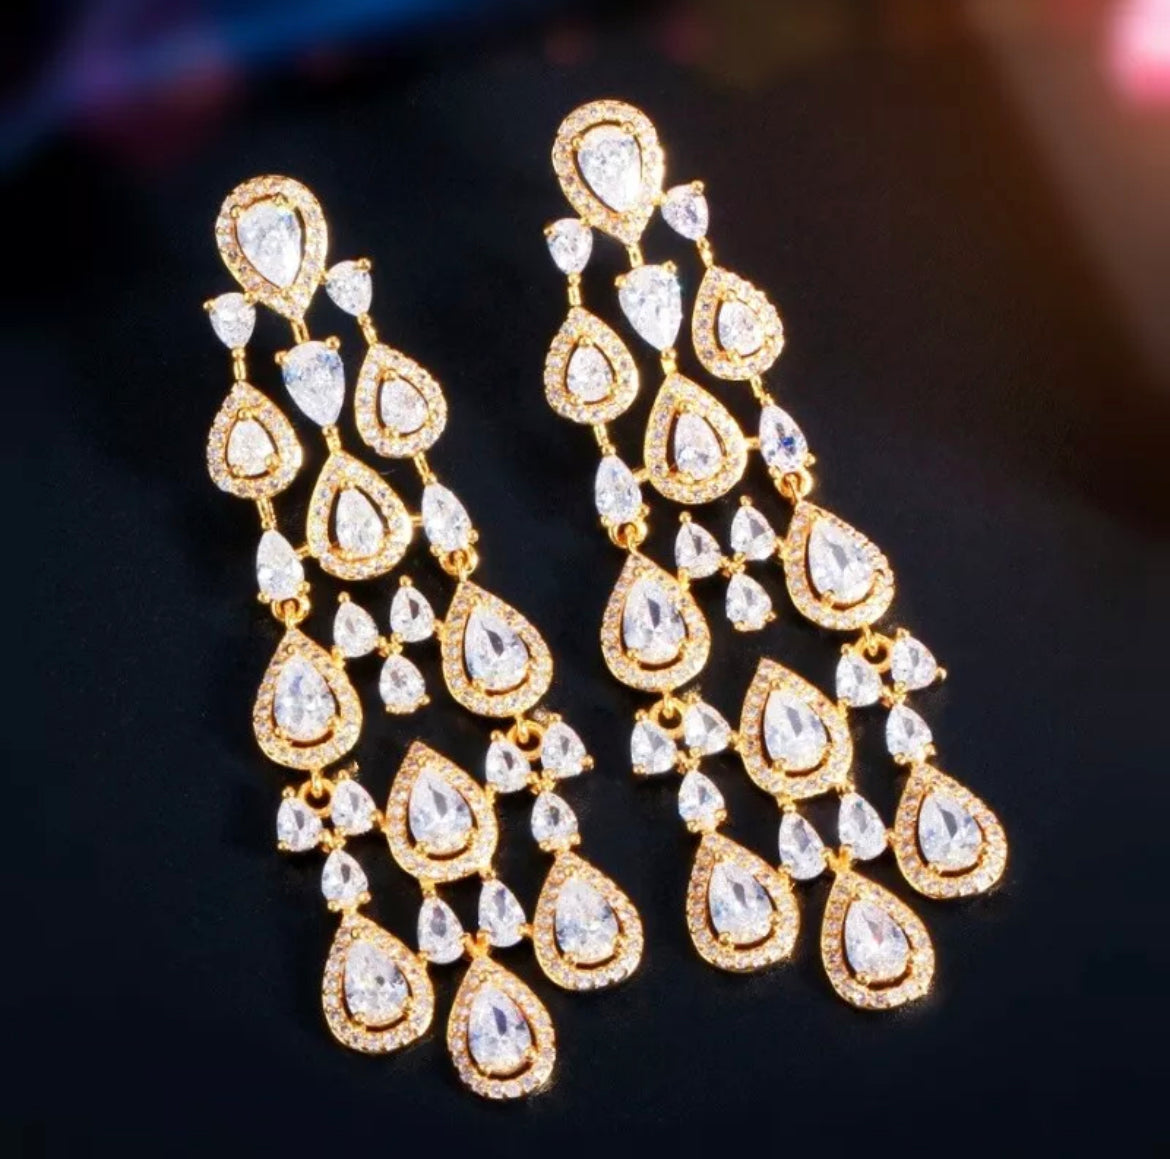 Azmina - Showstopping Swarovski Crystal Chandelier Drop Earrings - Set in 18k gold vermeil